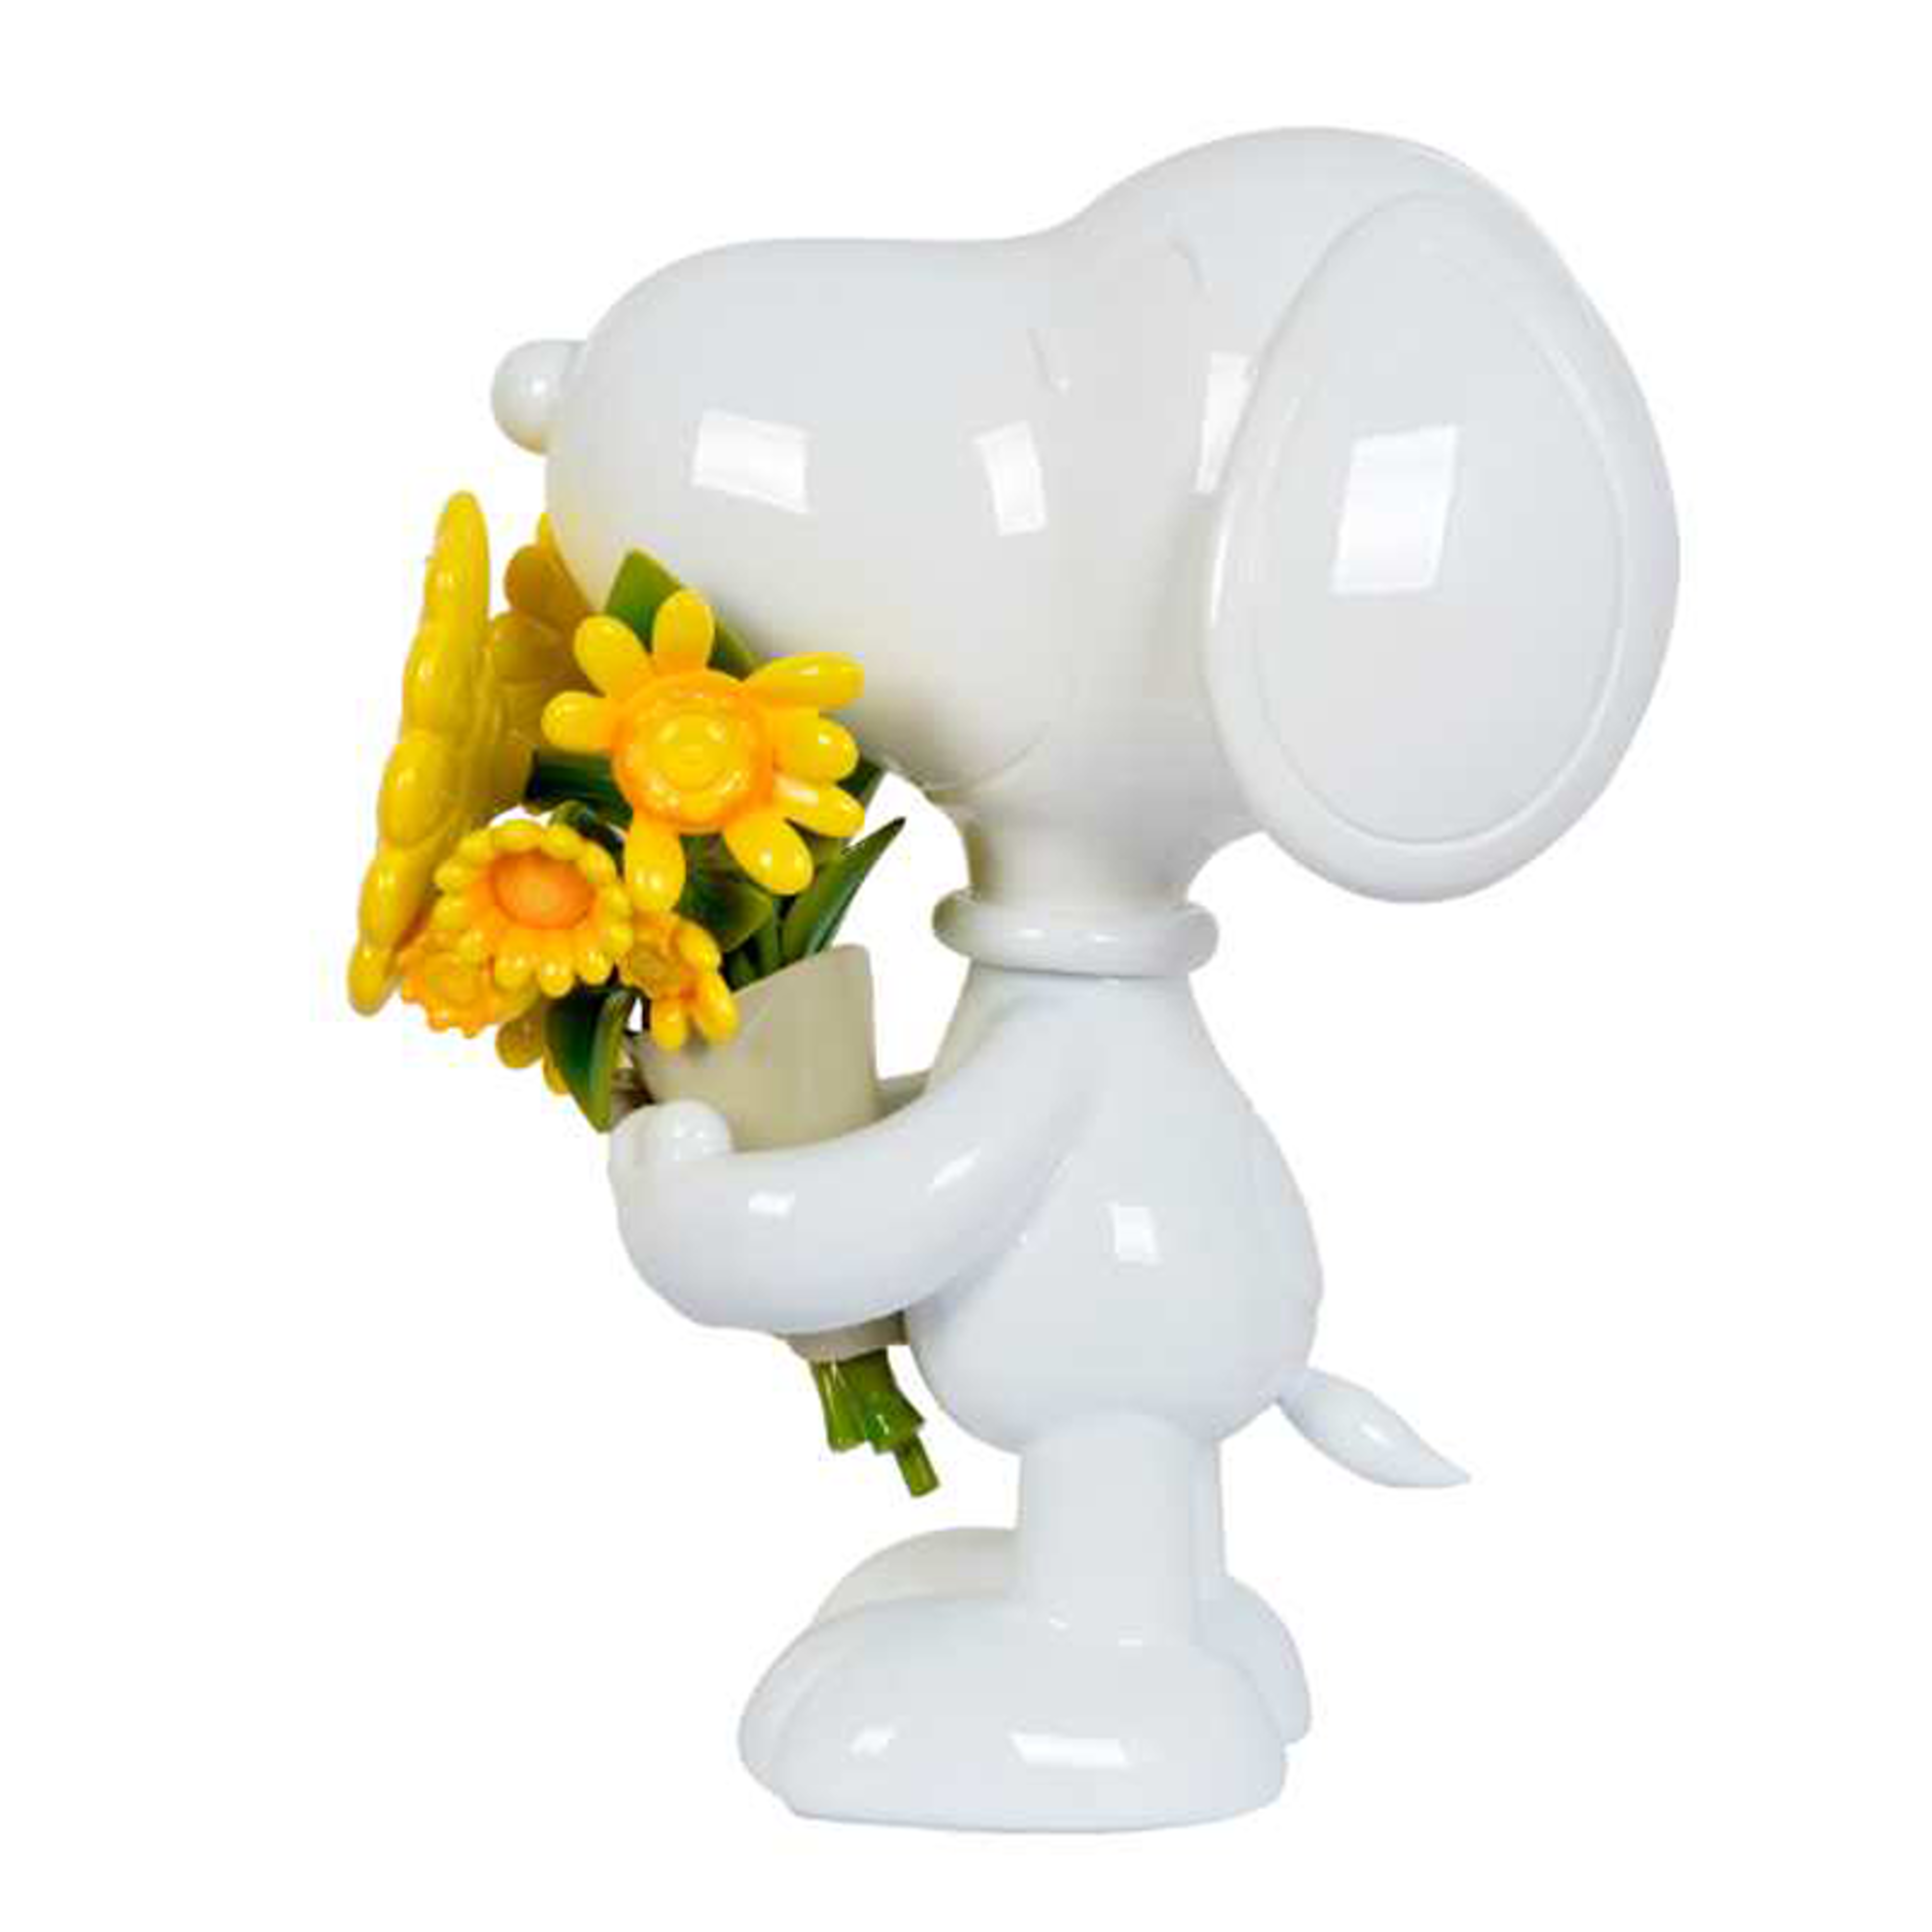 Alternate View 1 of Snoopy Gloss White | Flower